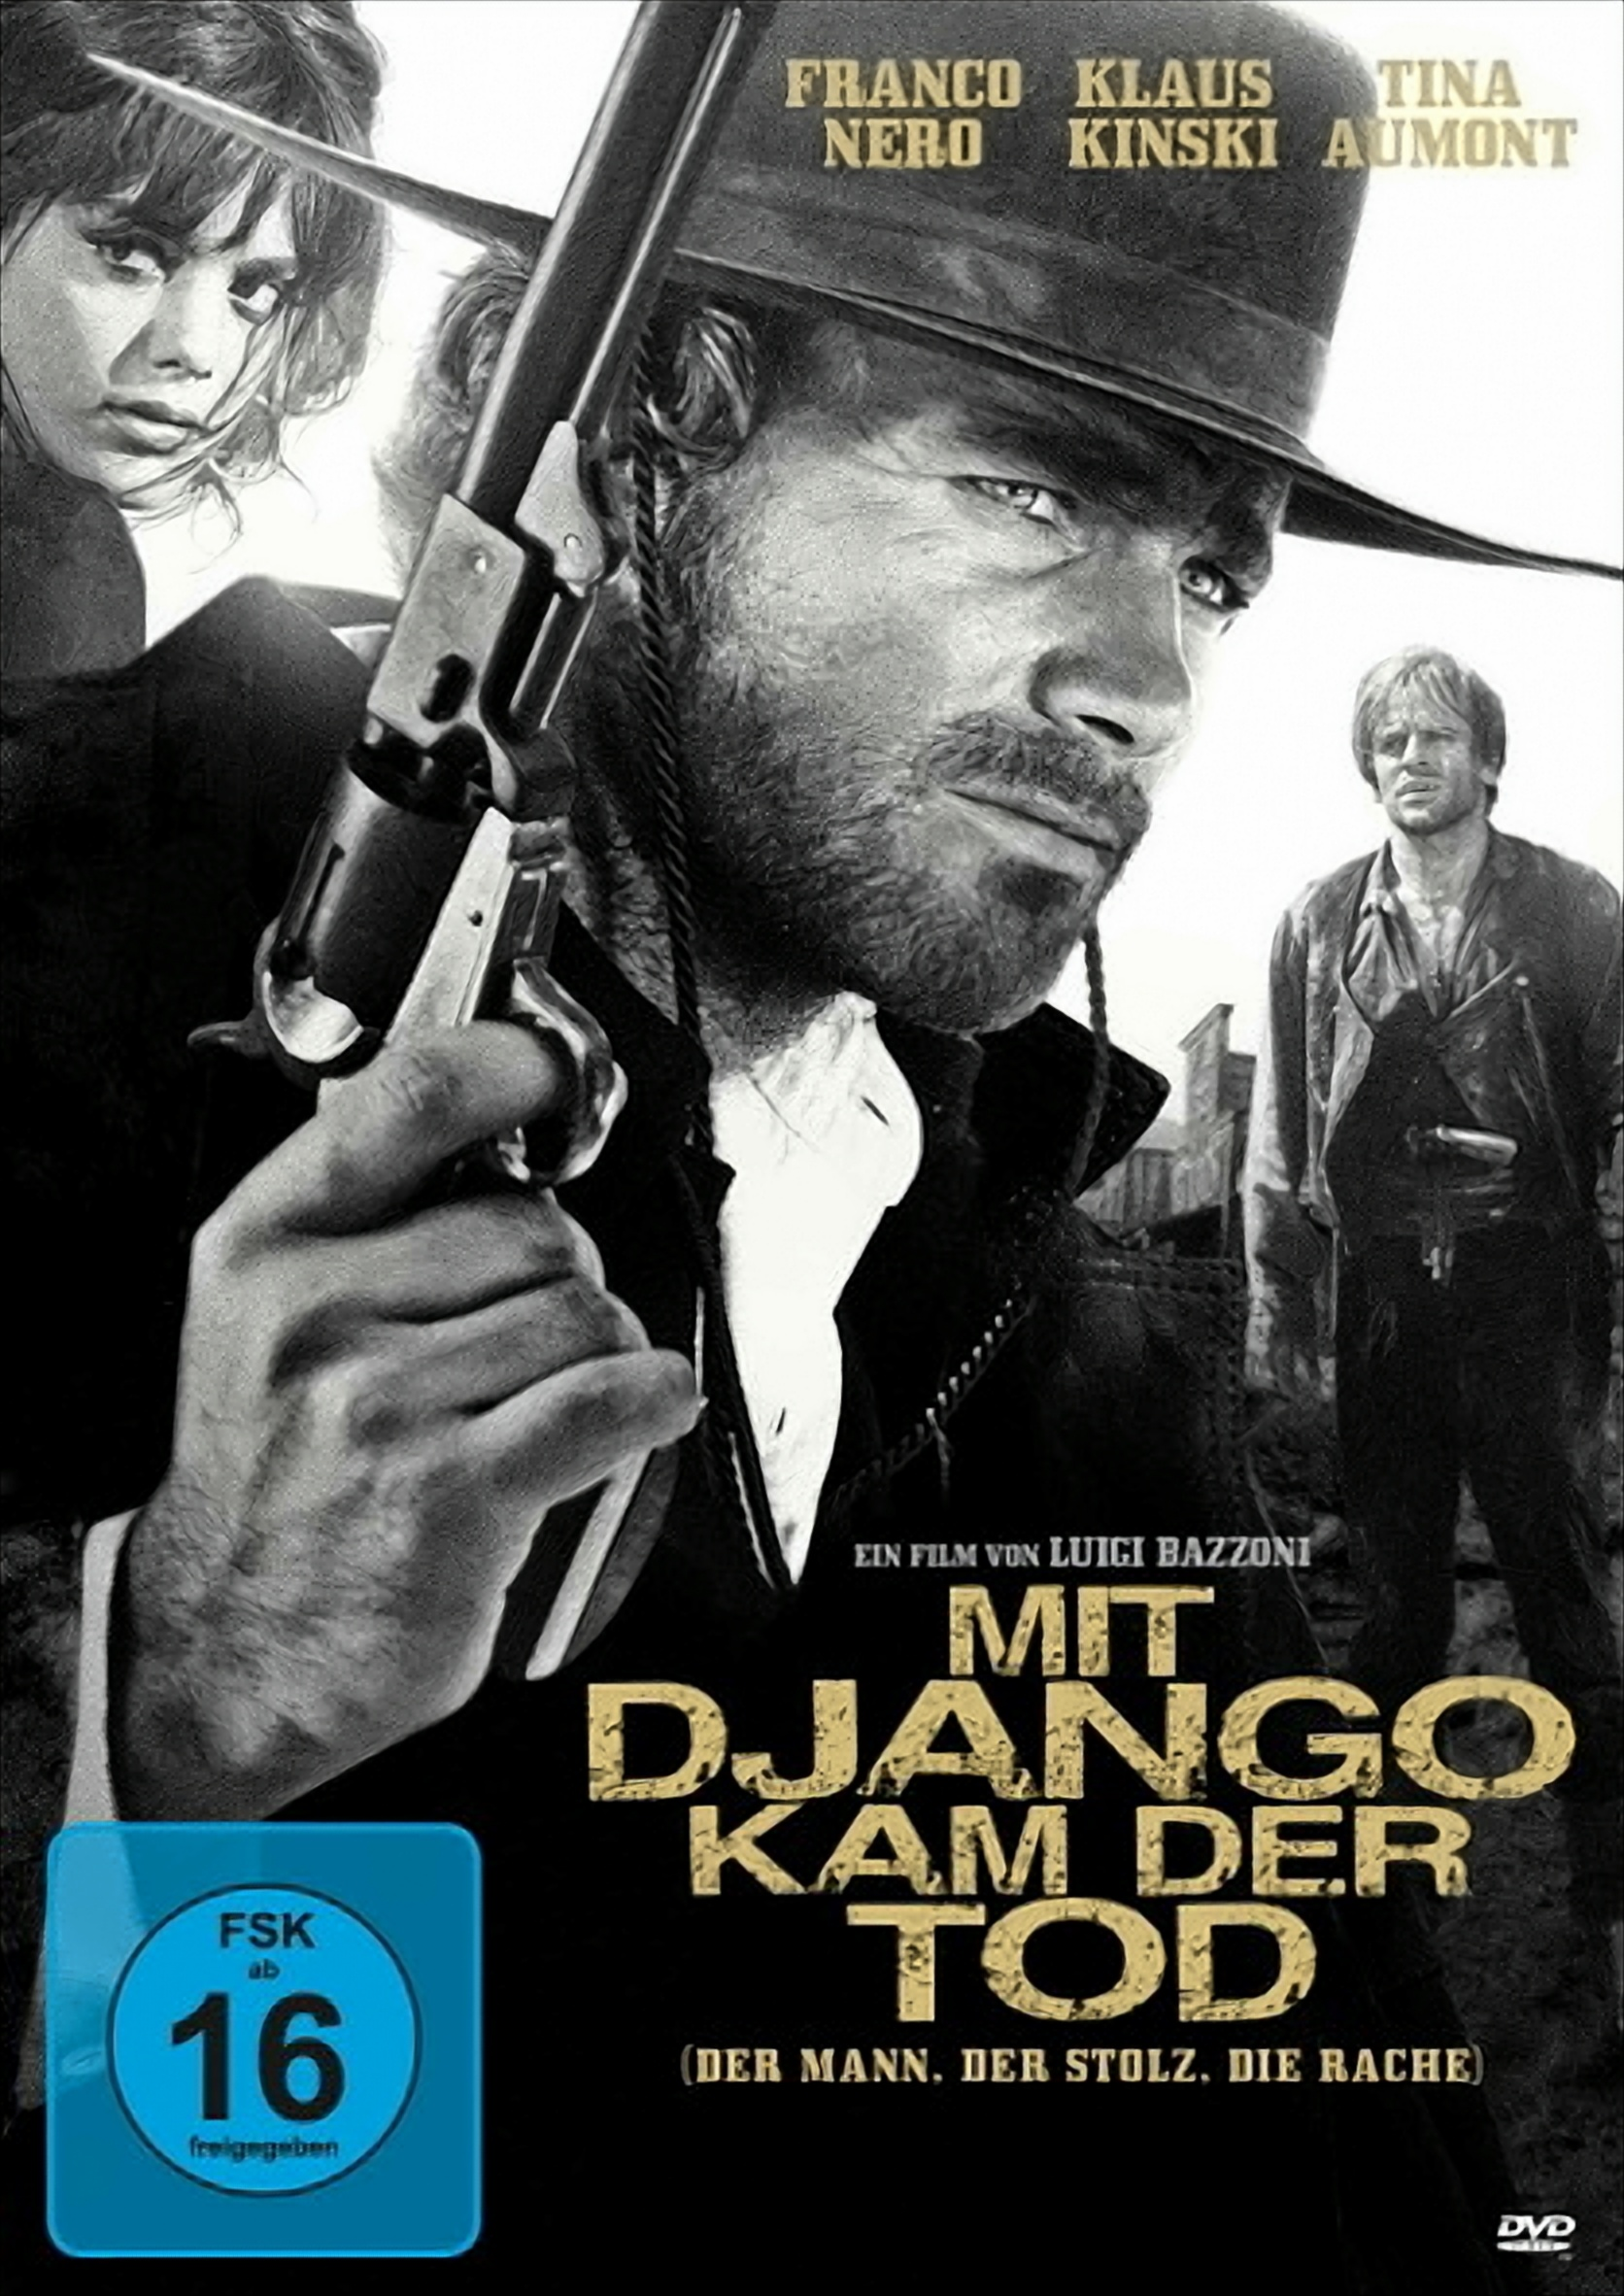 Mit Django Tod der DVD kam